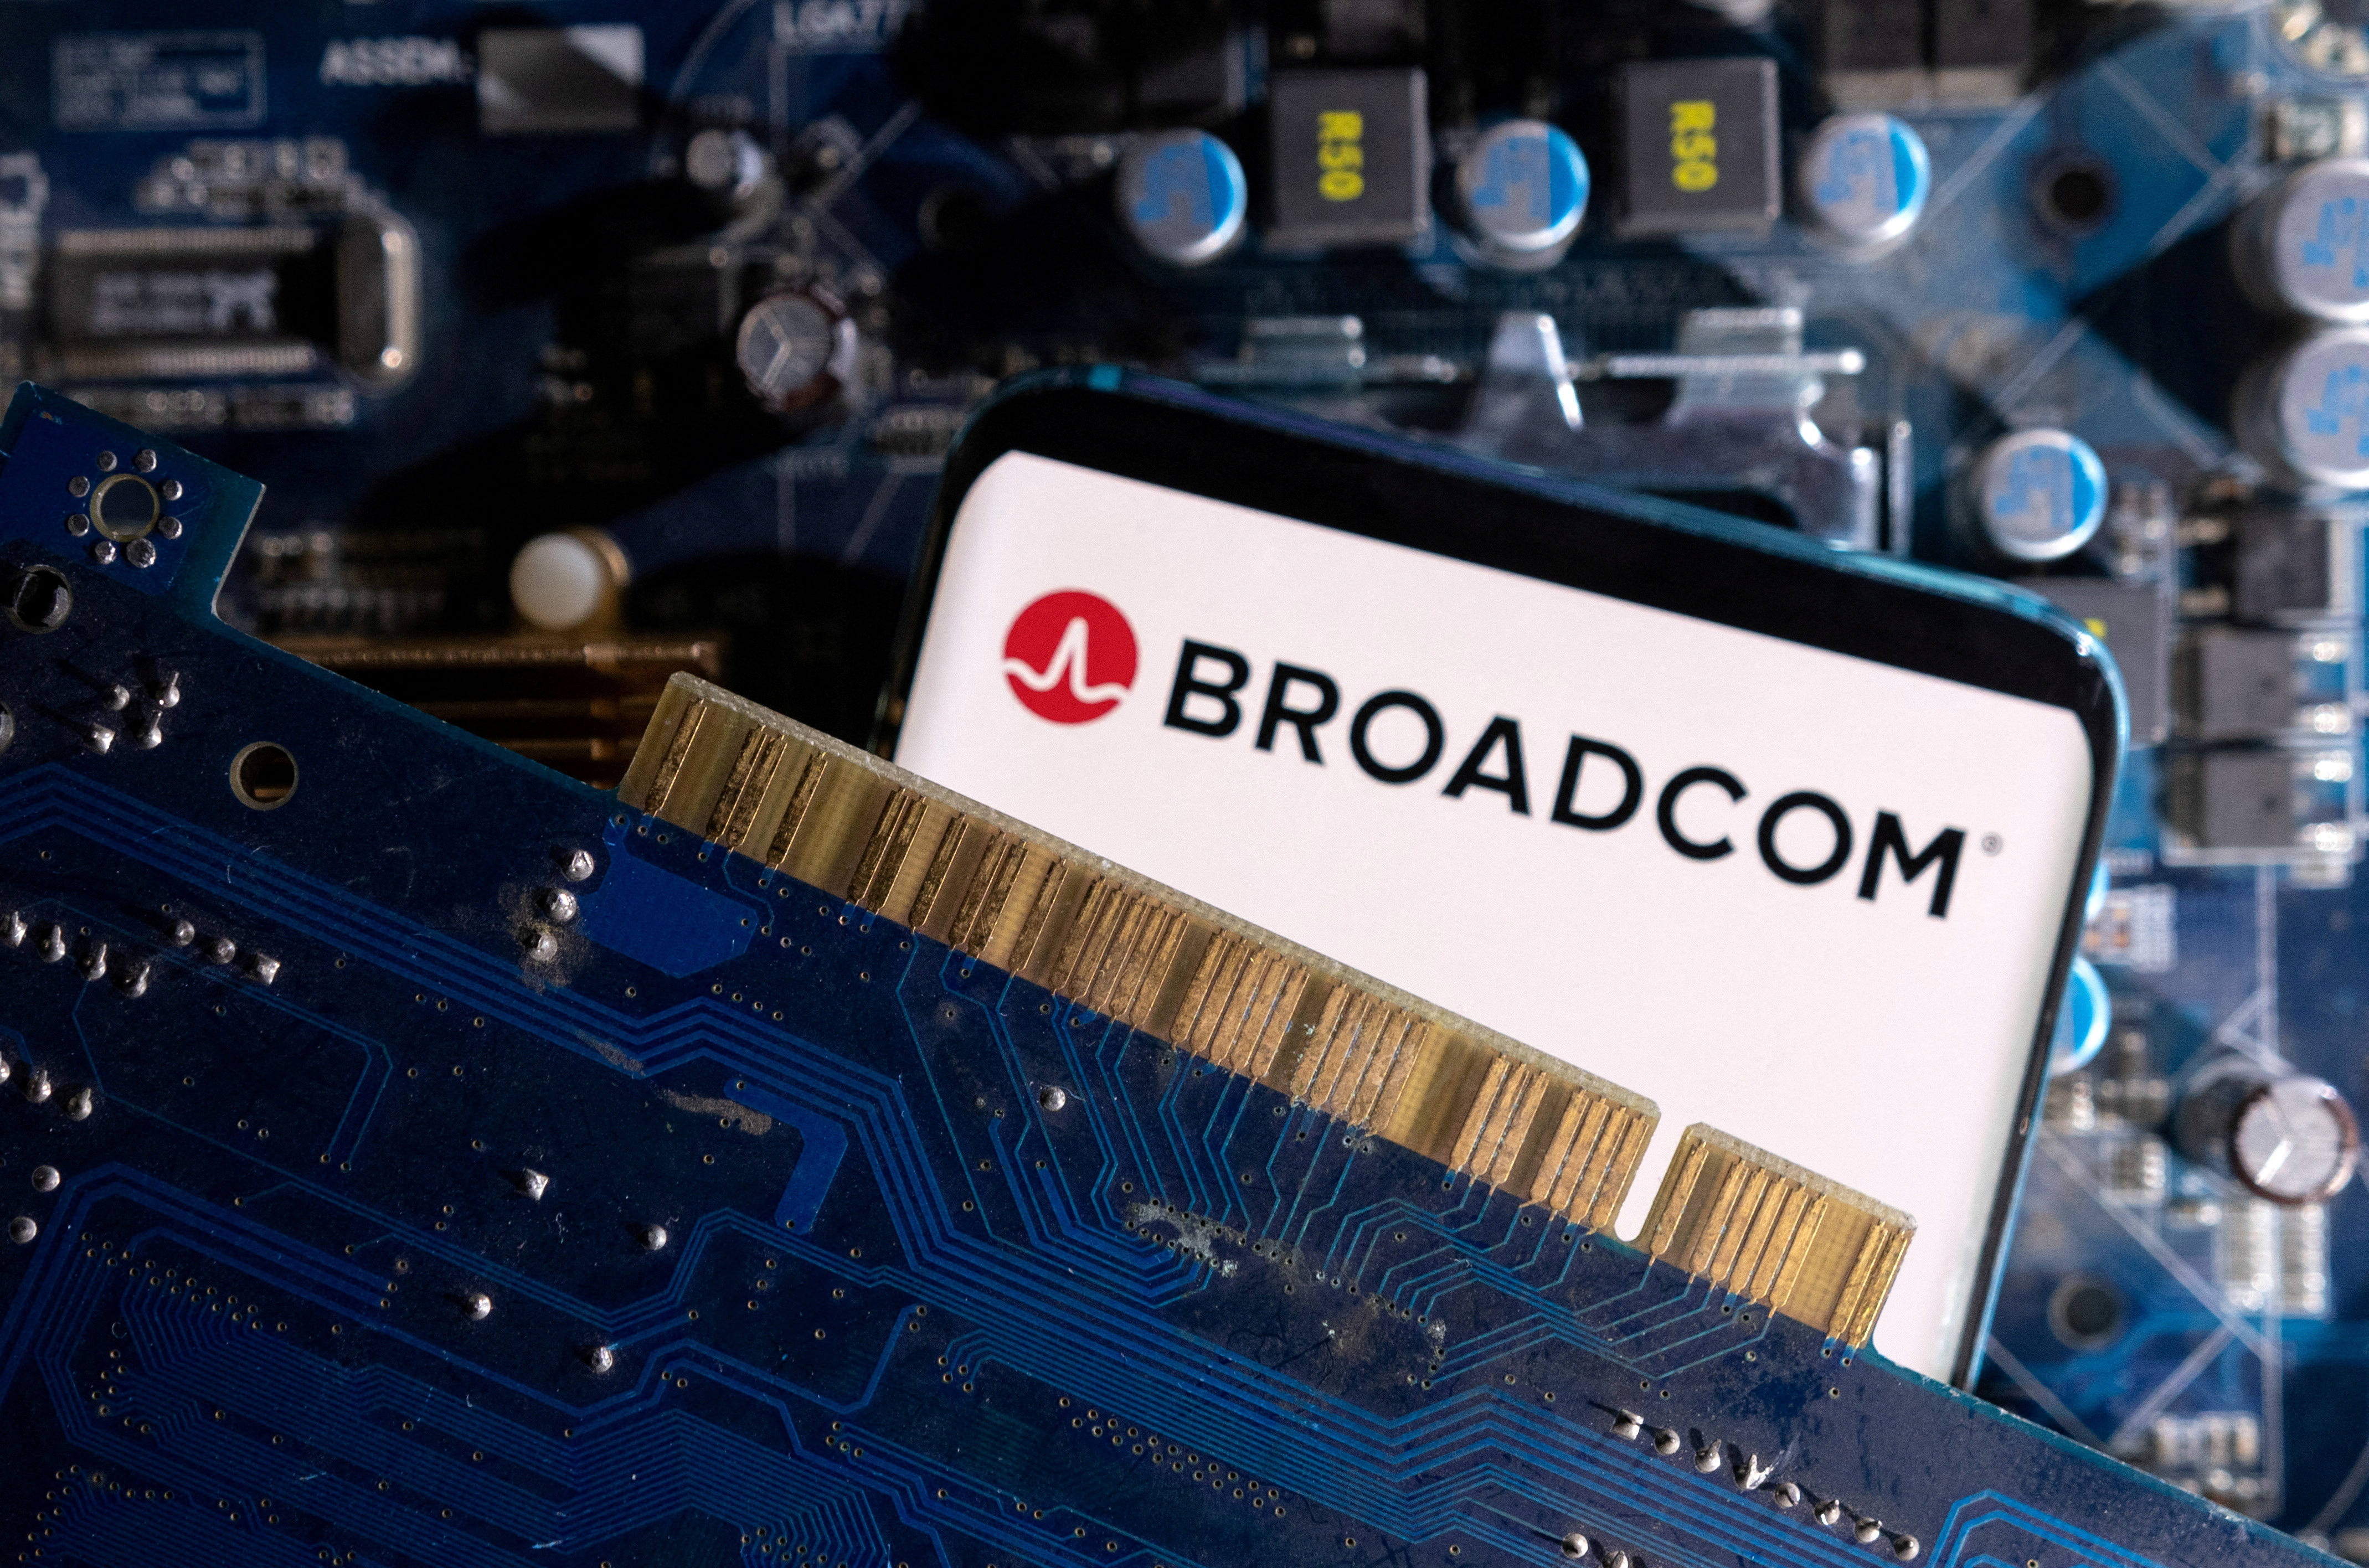 Illustration shows Broadcom logo